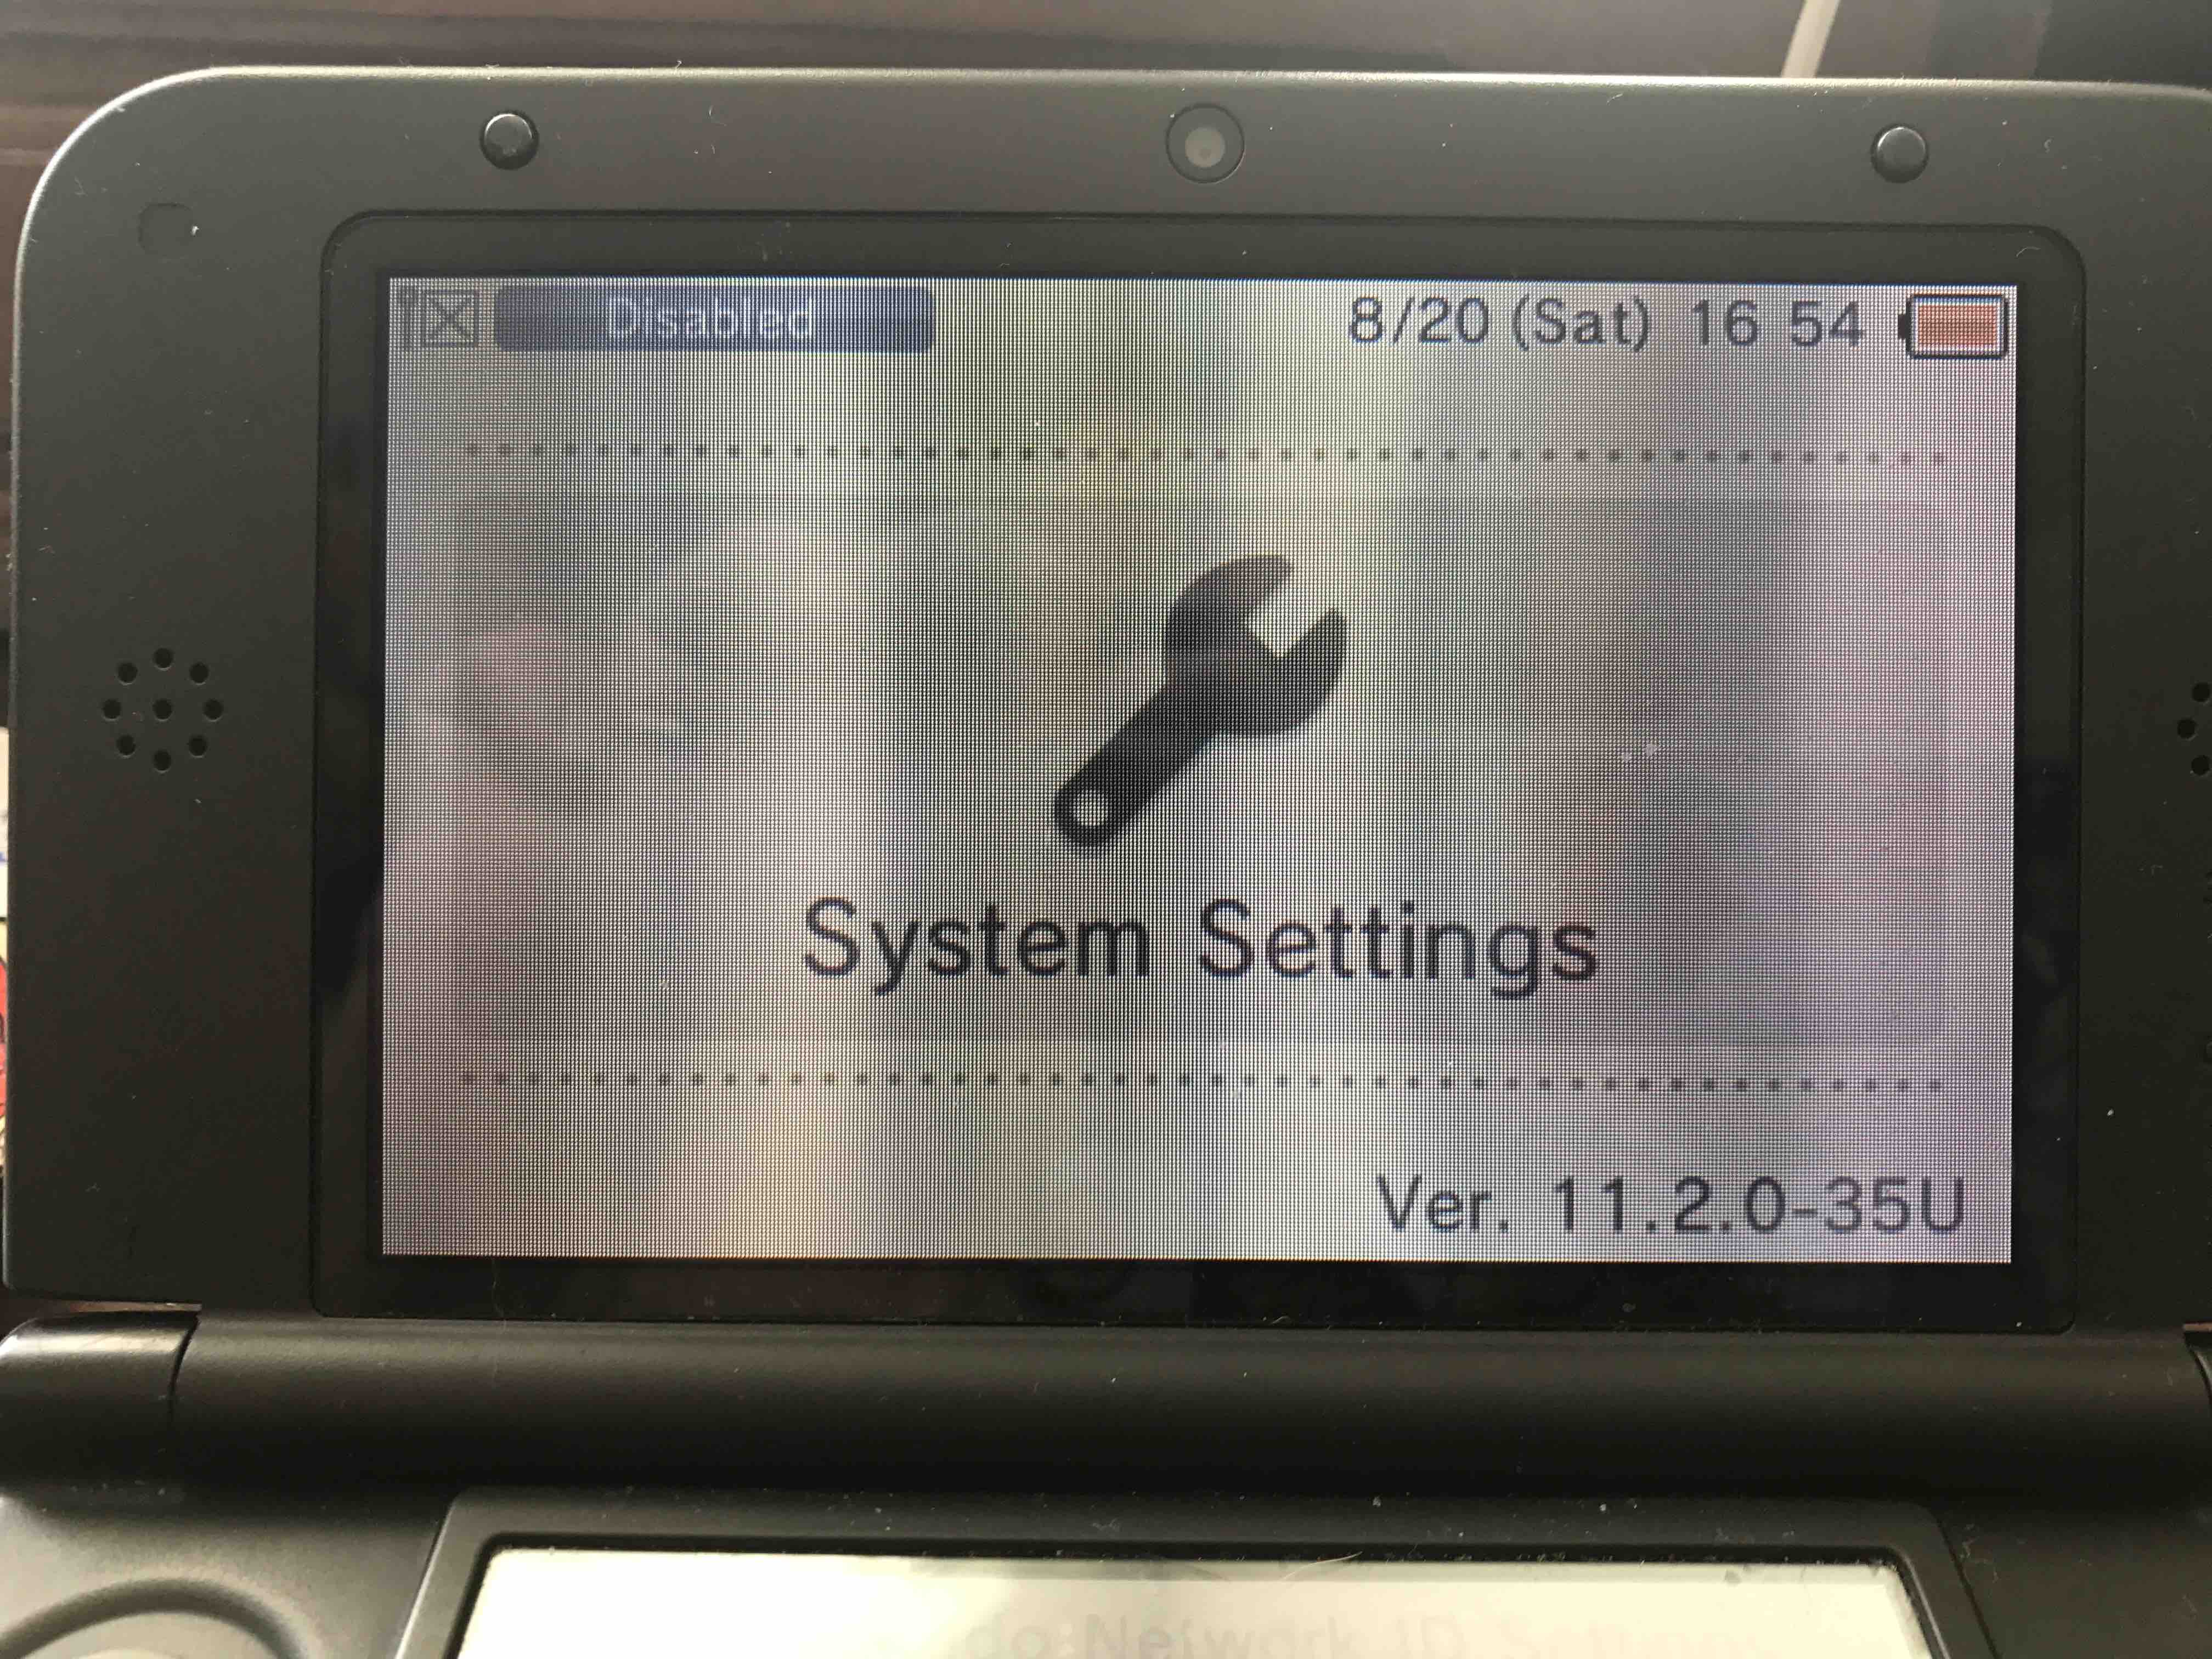 Region unlock. Nintendo DS settings.